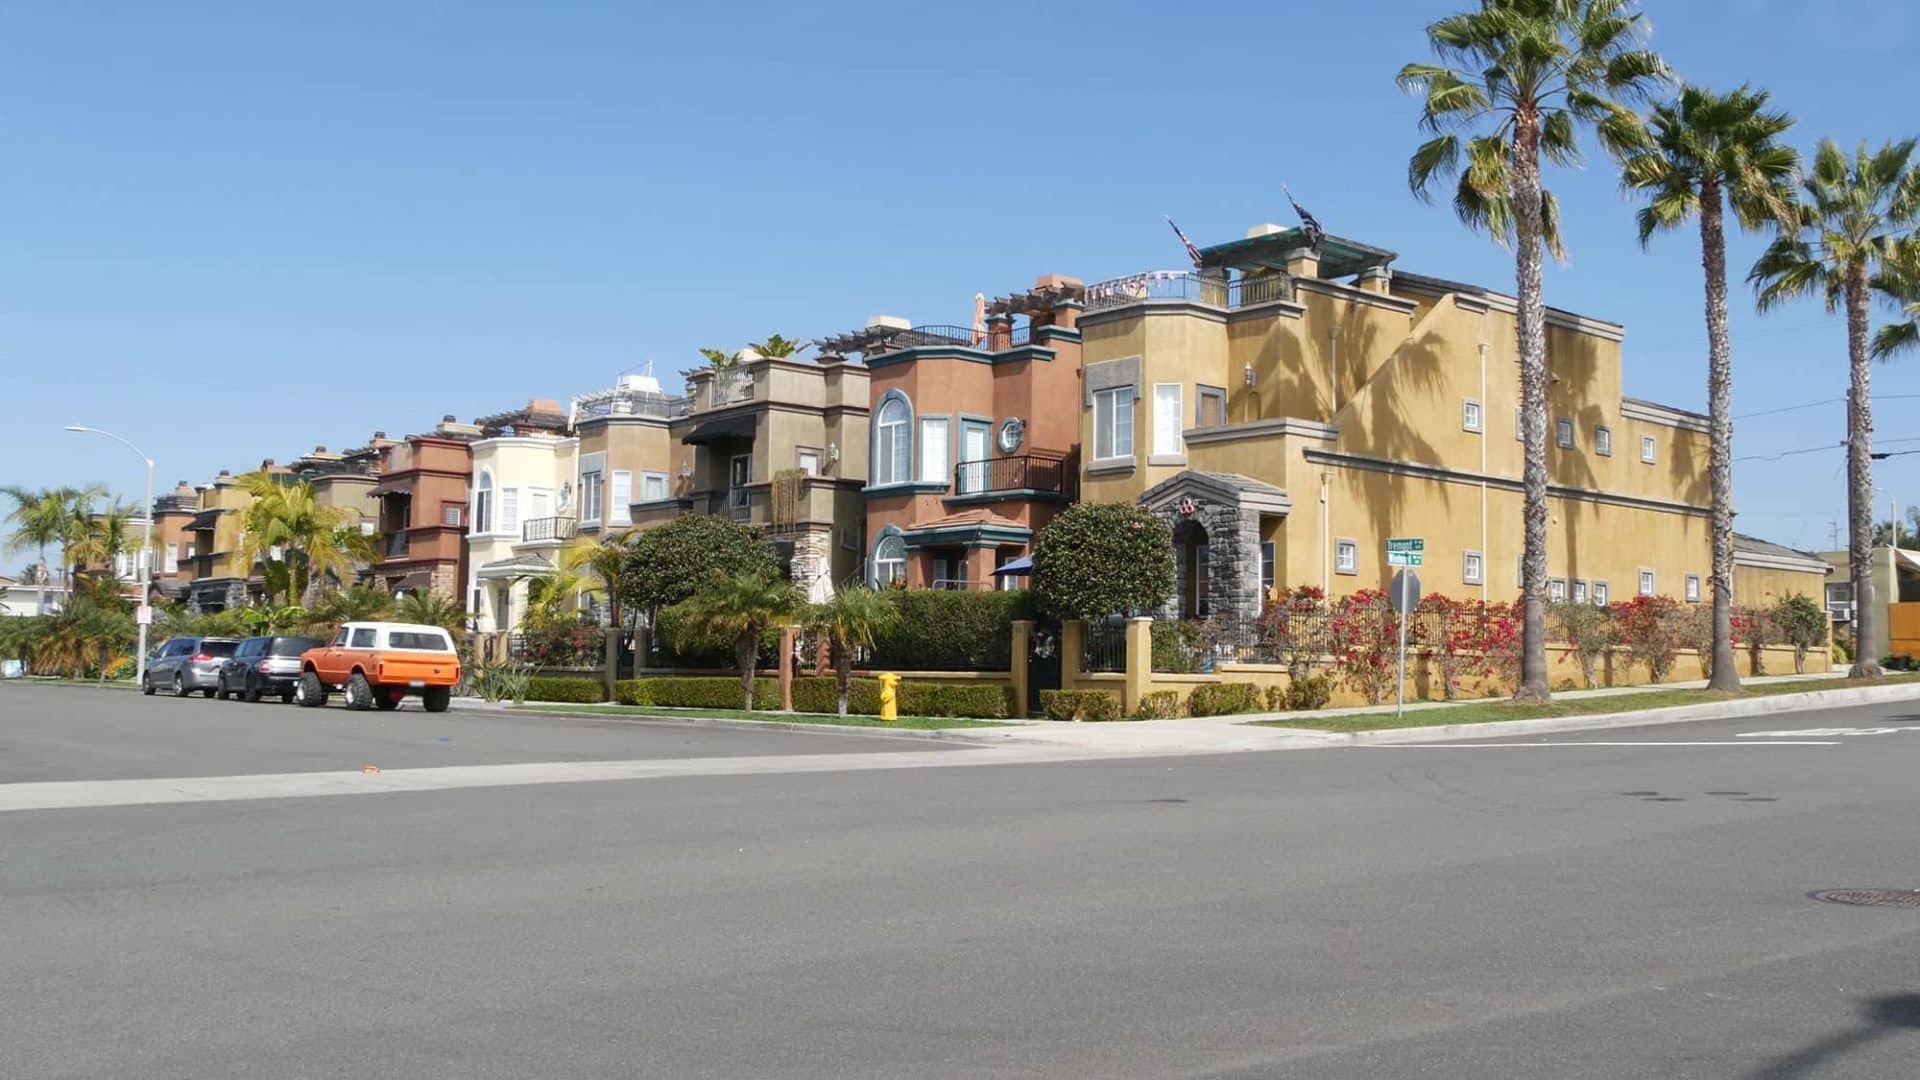 california-suburban-street-oceanside-usa-houses-generic-american-residential-district-real-estate